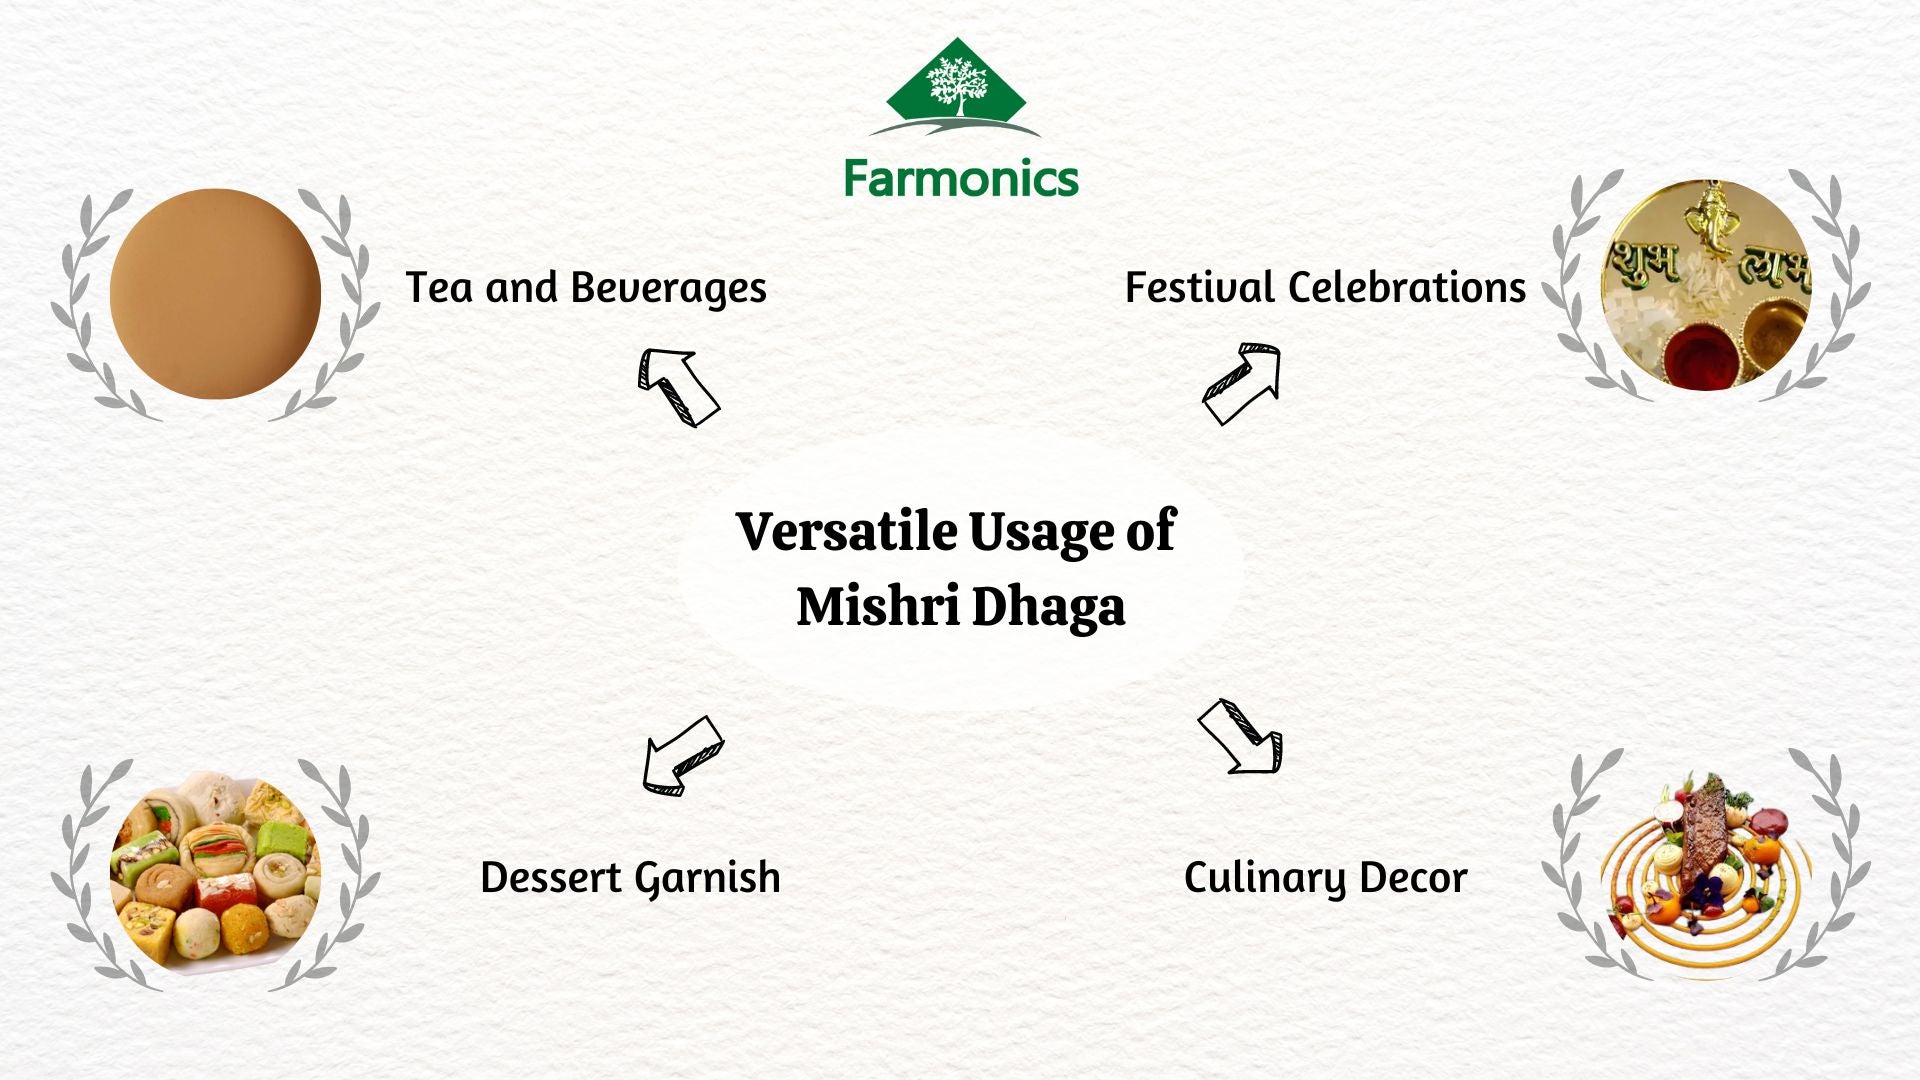 here are the list of versatile use of mishri dhafga from Framonics 